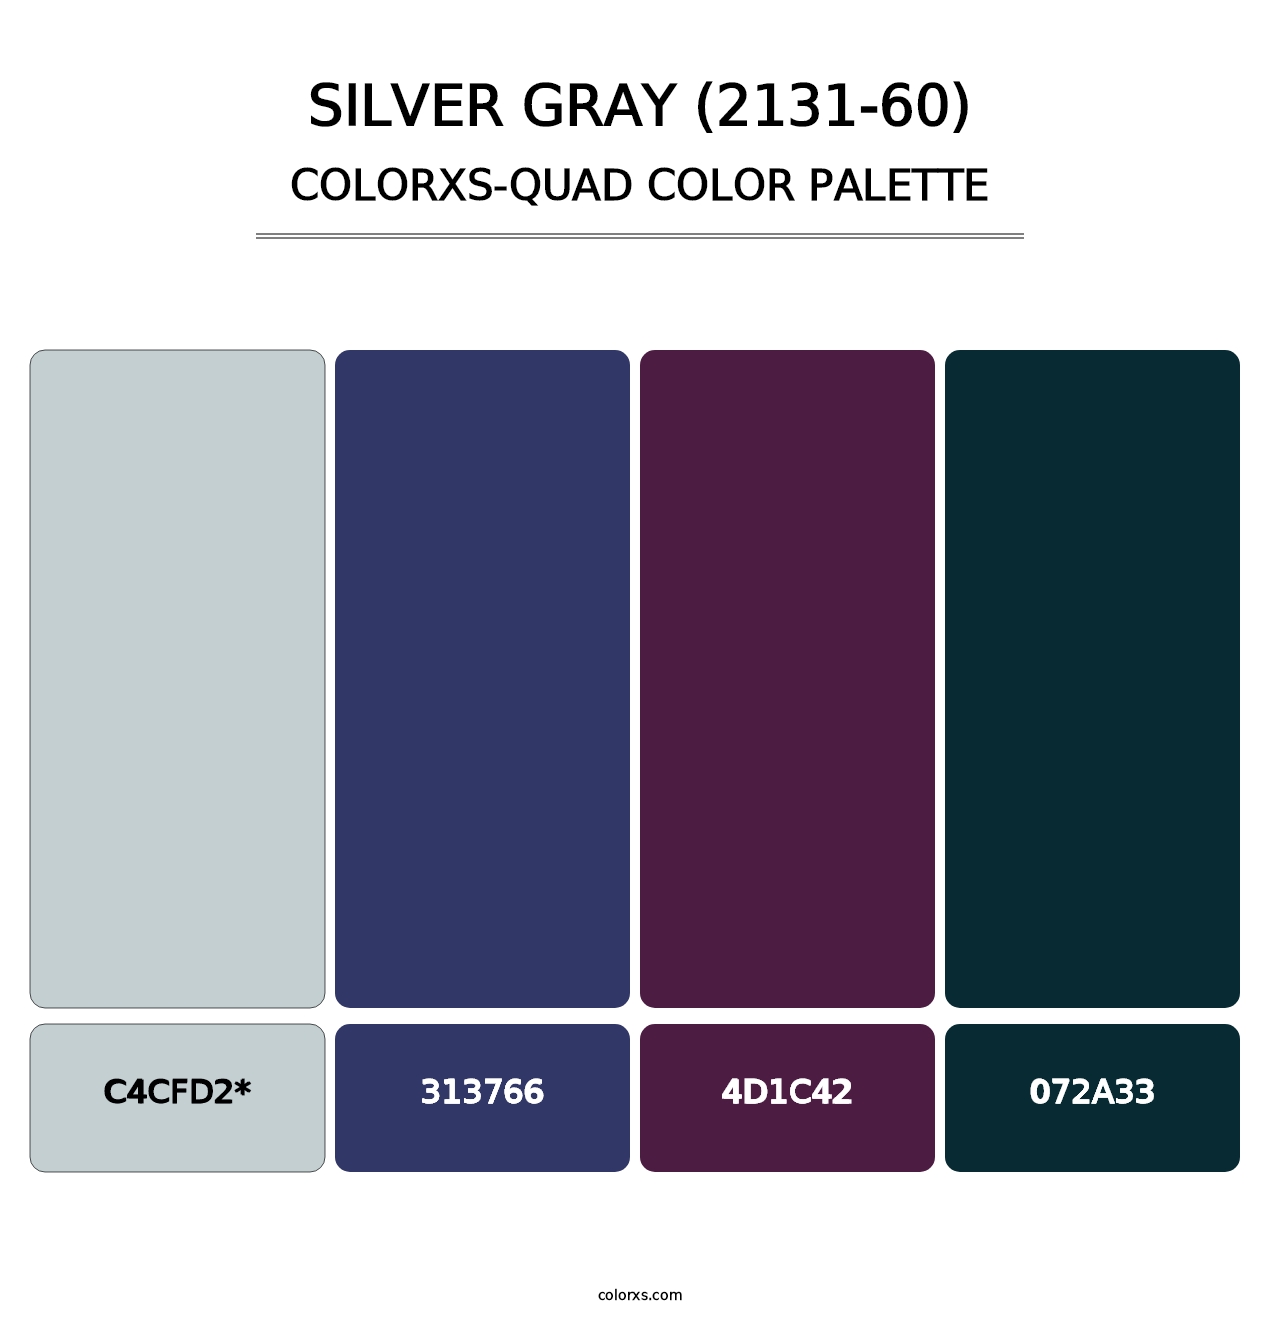 Silver Gray (2131-60) - Colorxs Quad Palette